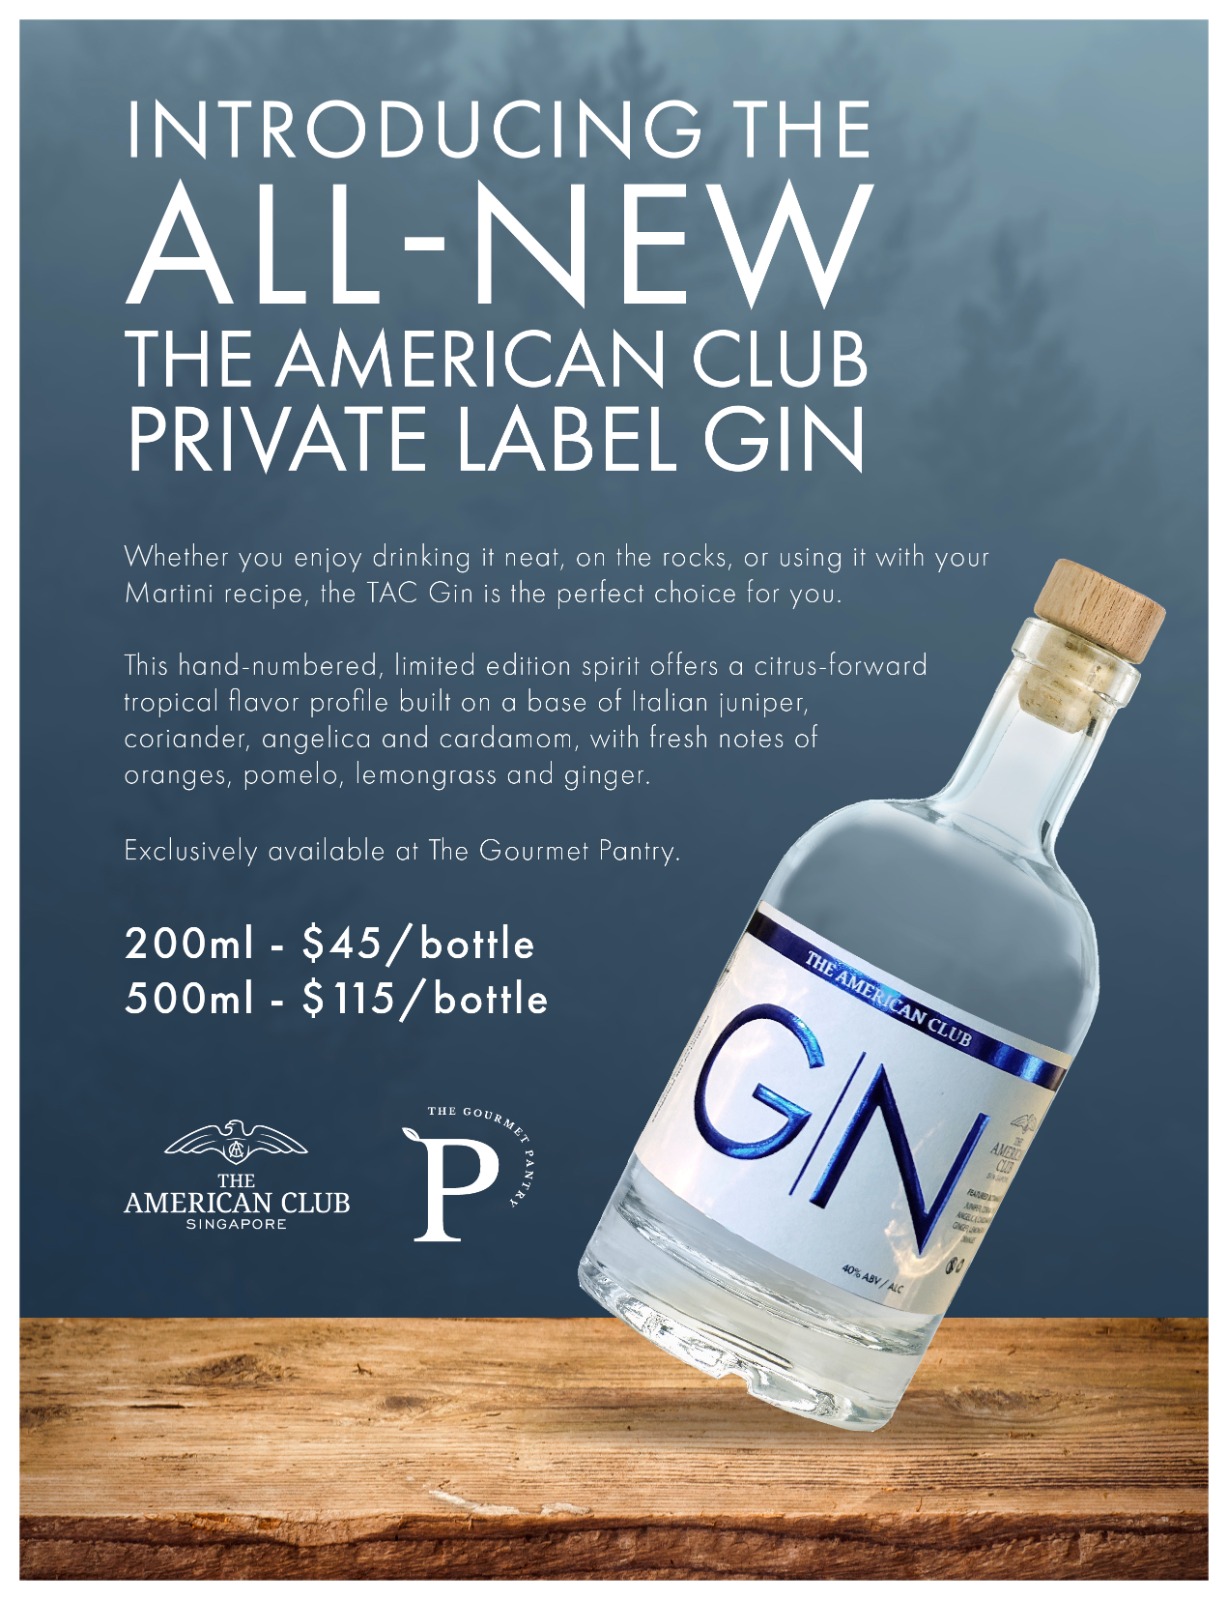 The American Club private label gin